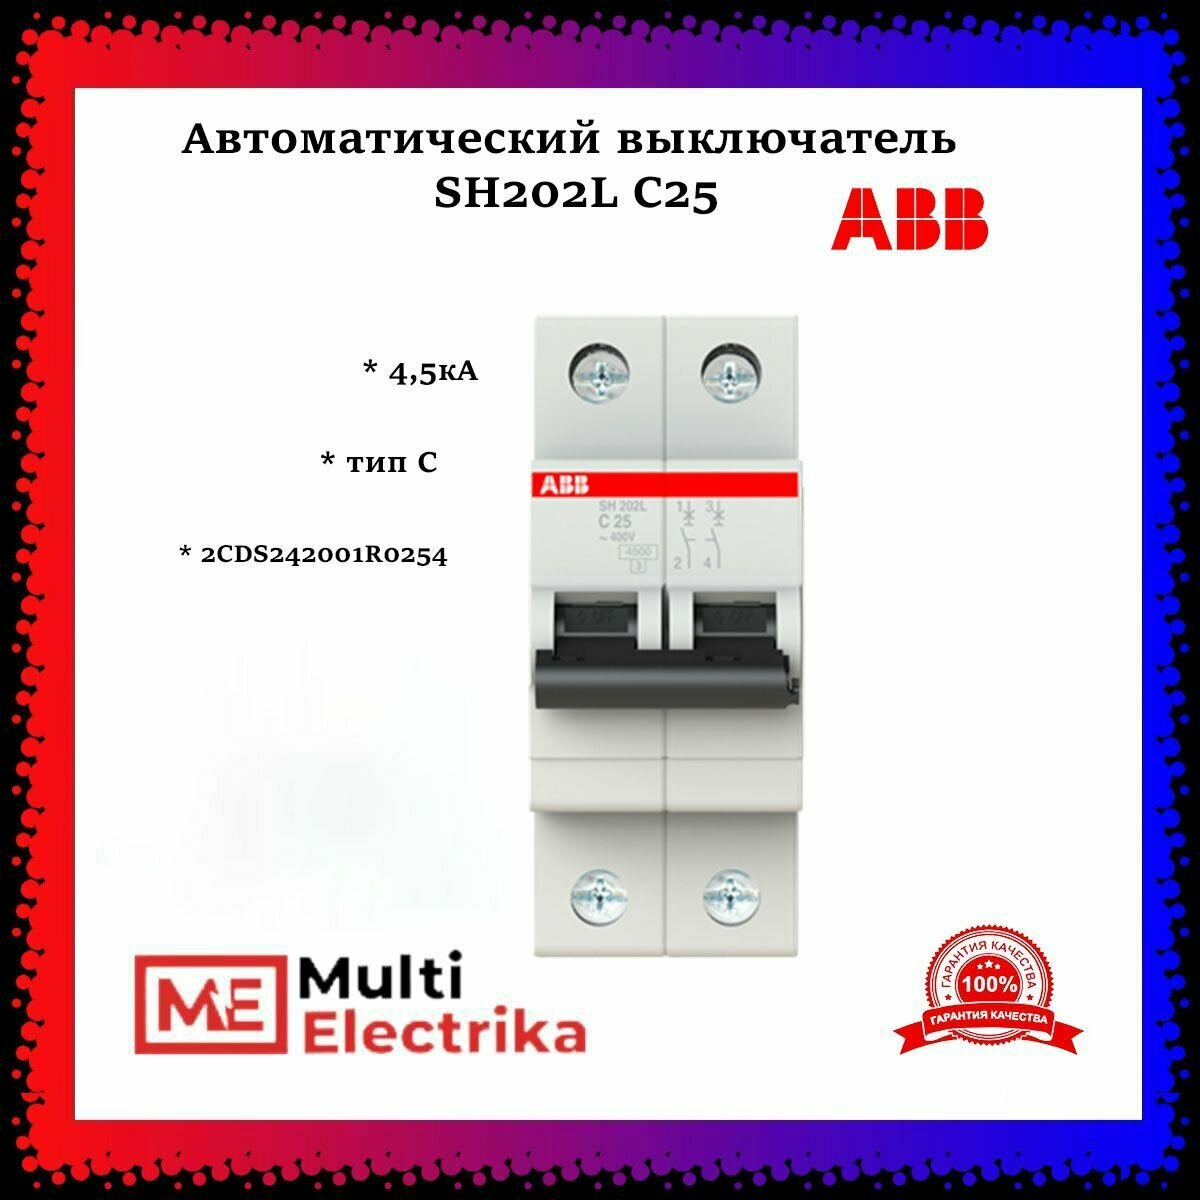 Автоматические выключатели ABB - фото №17